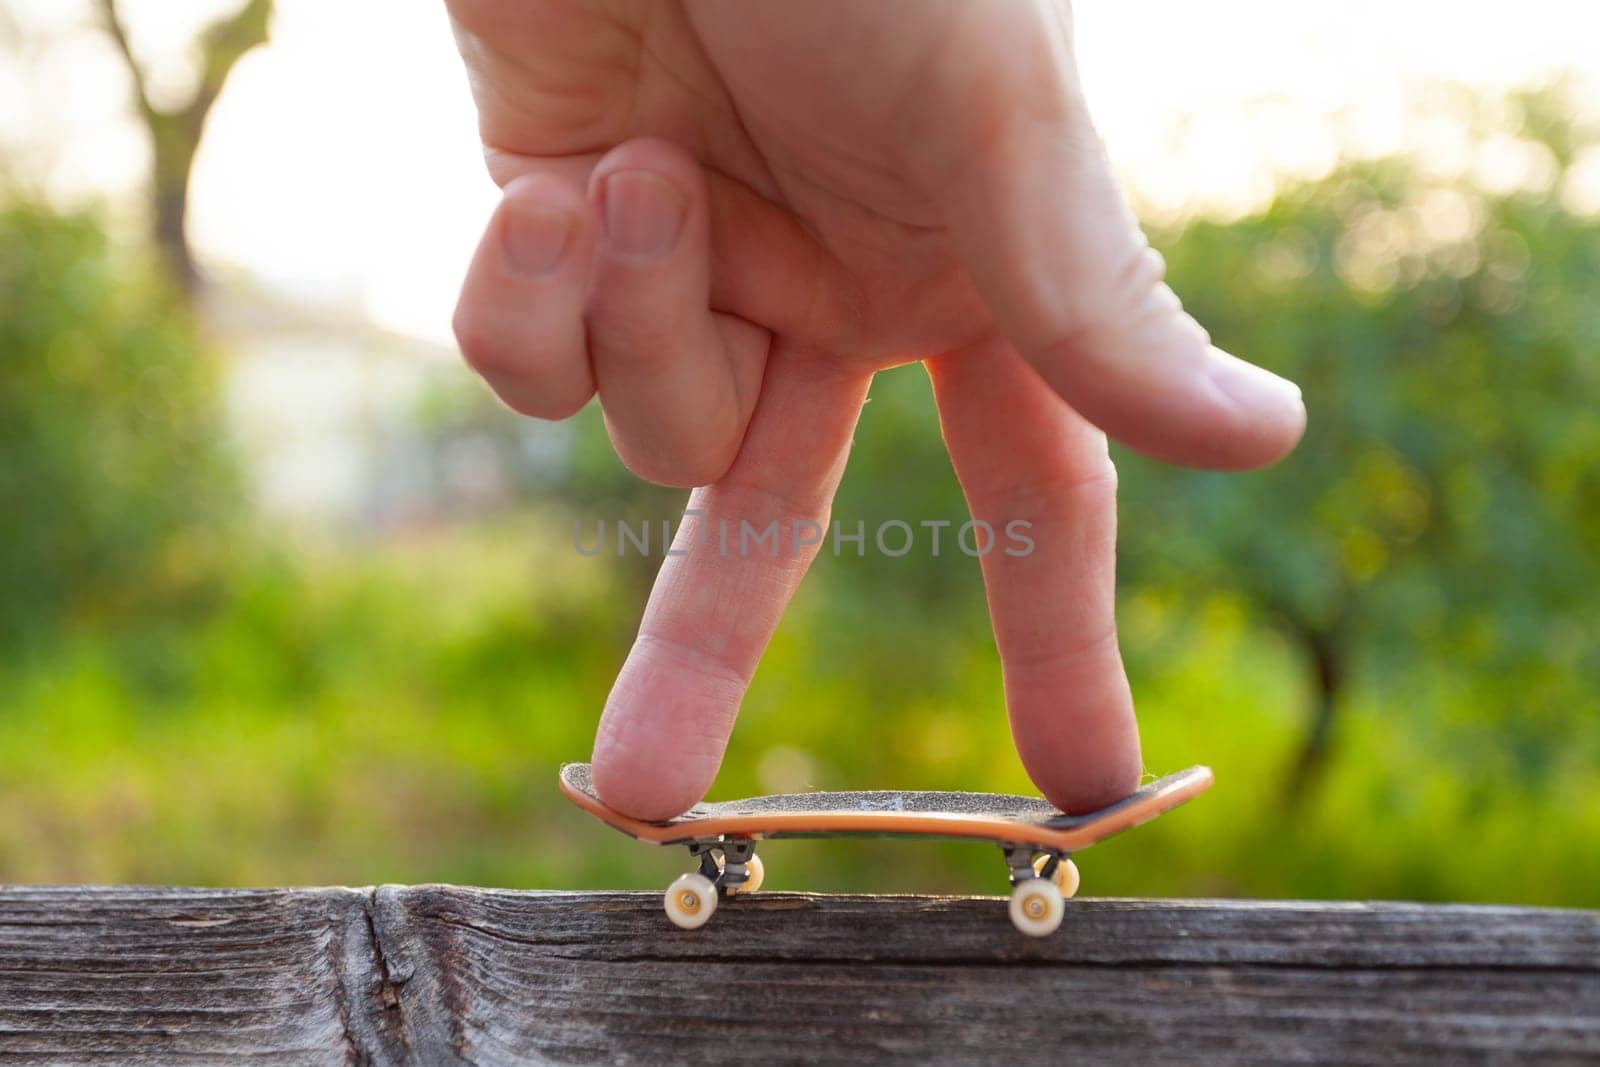 A man's fingers ride a small skateboard like a little man by gordiza